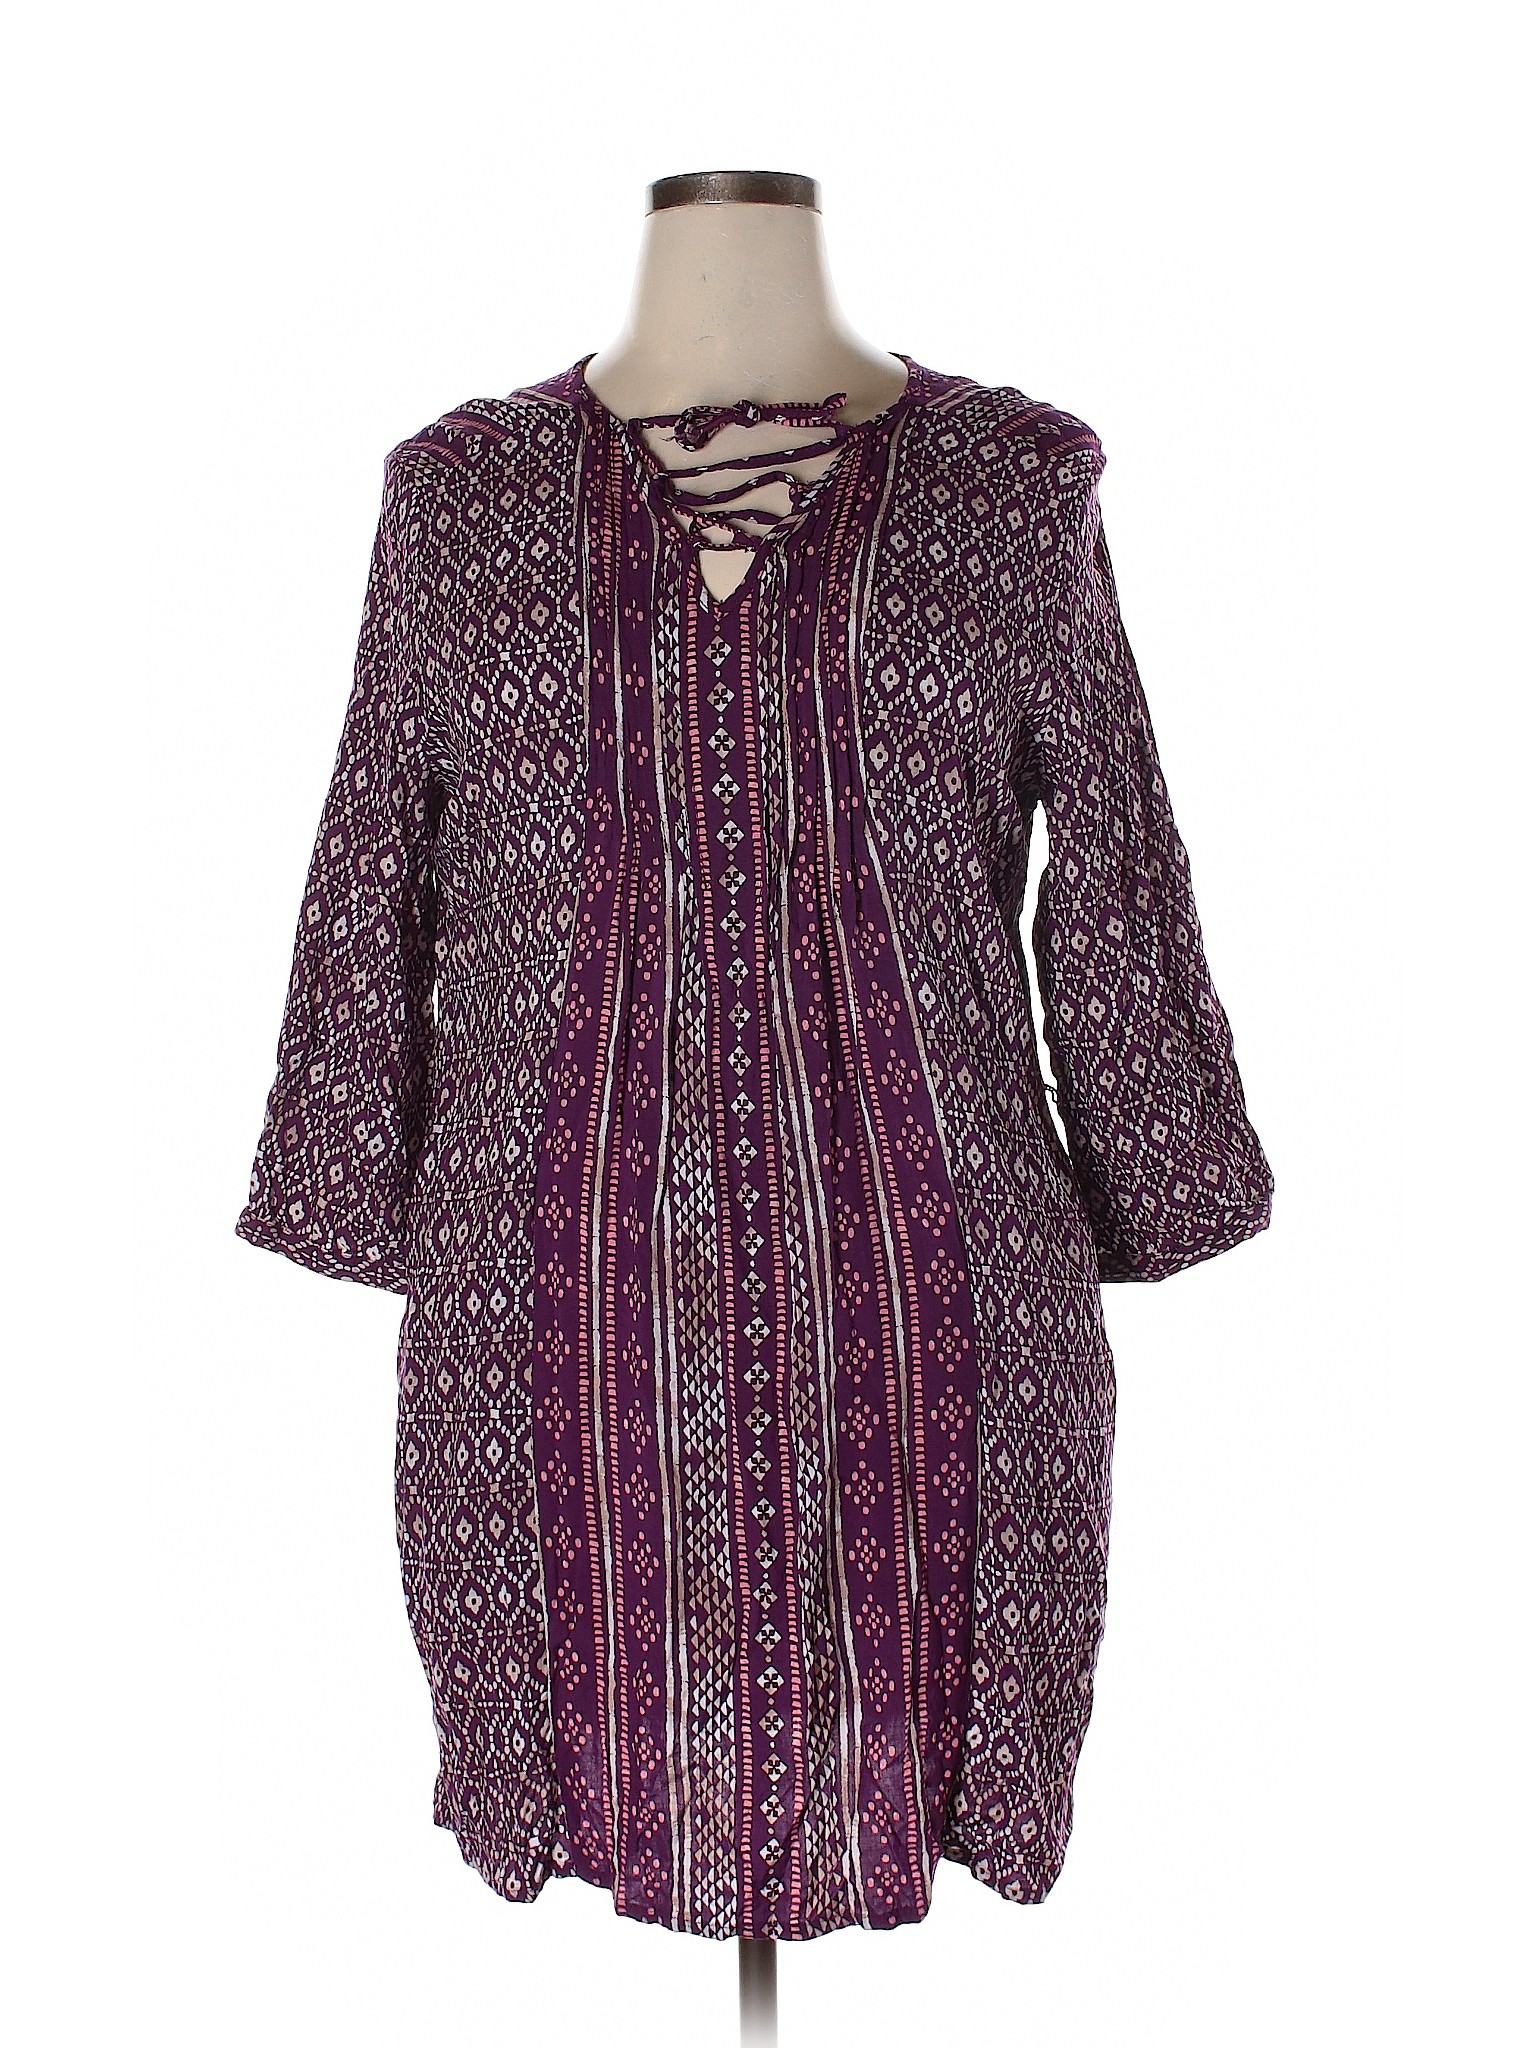 SONOMA life + style Women Purple Casual Dress XL | eBay